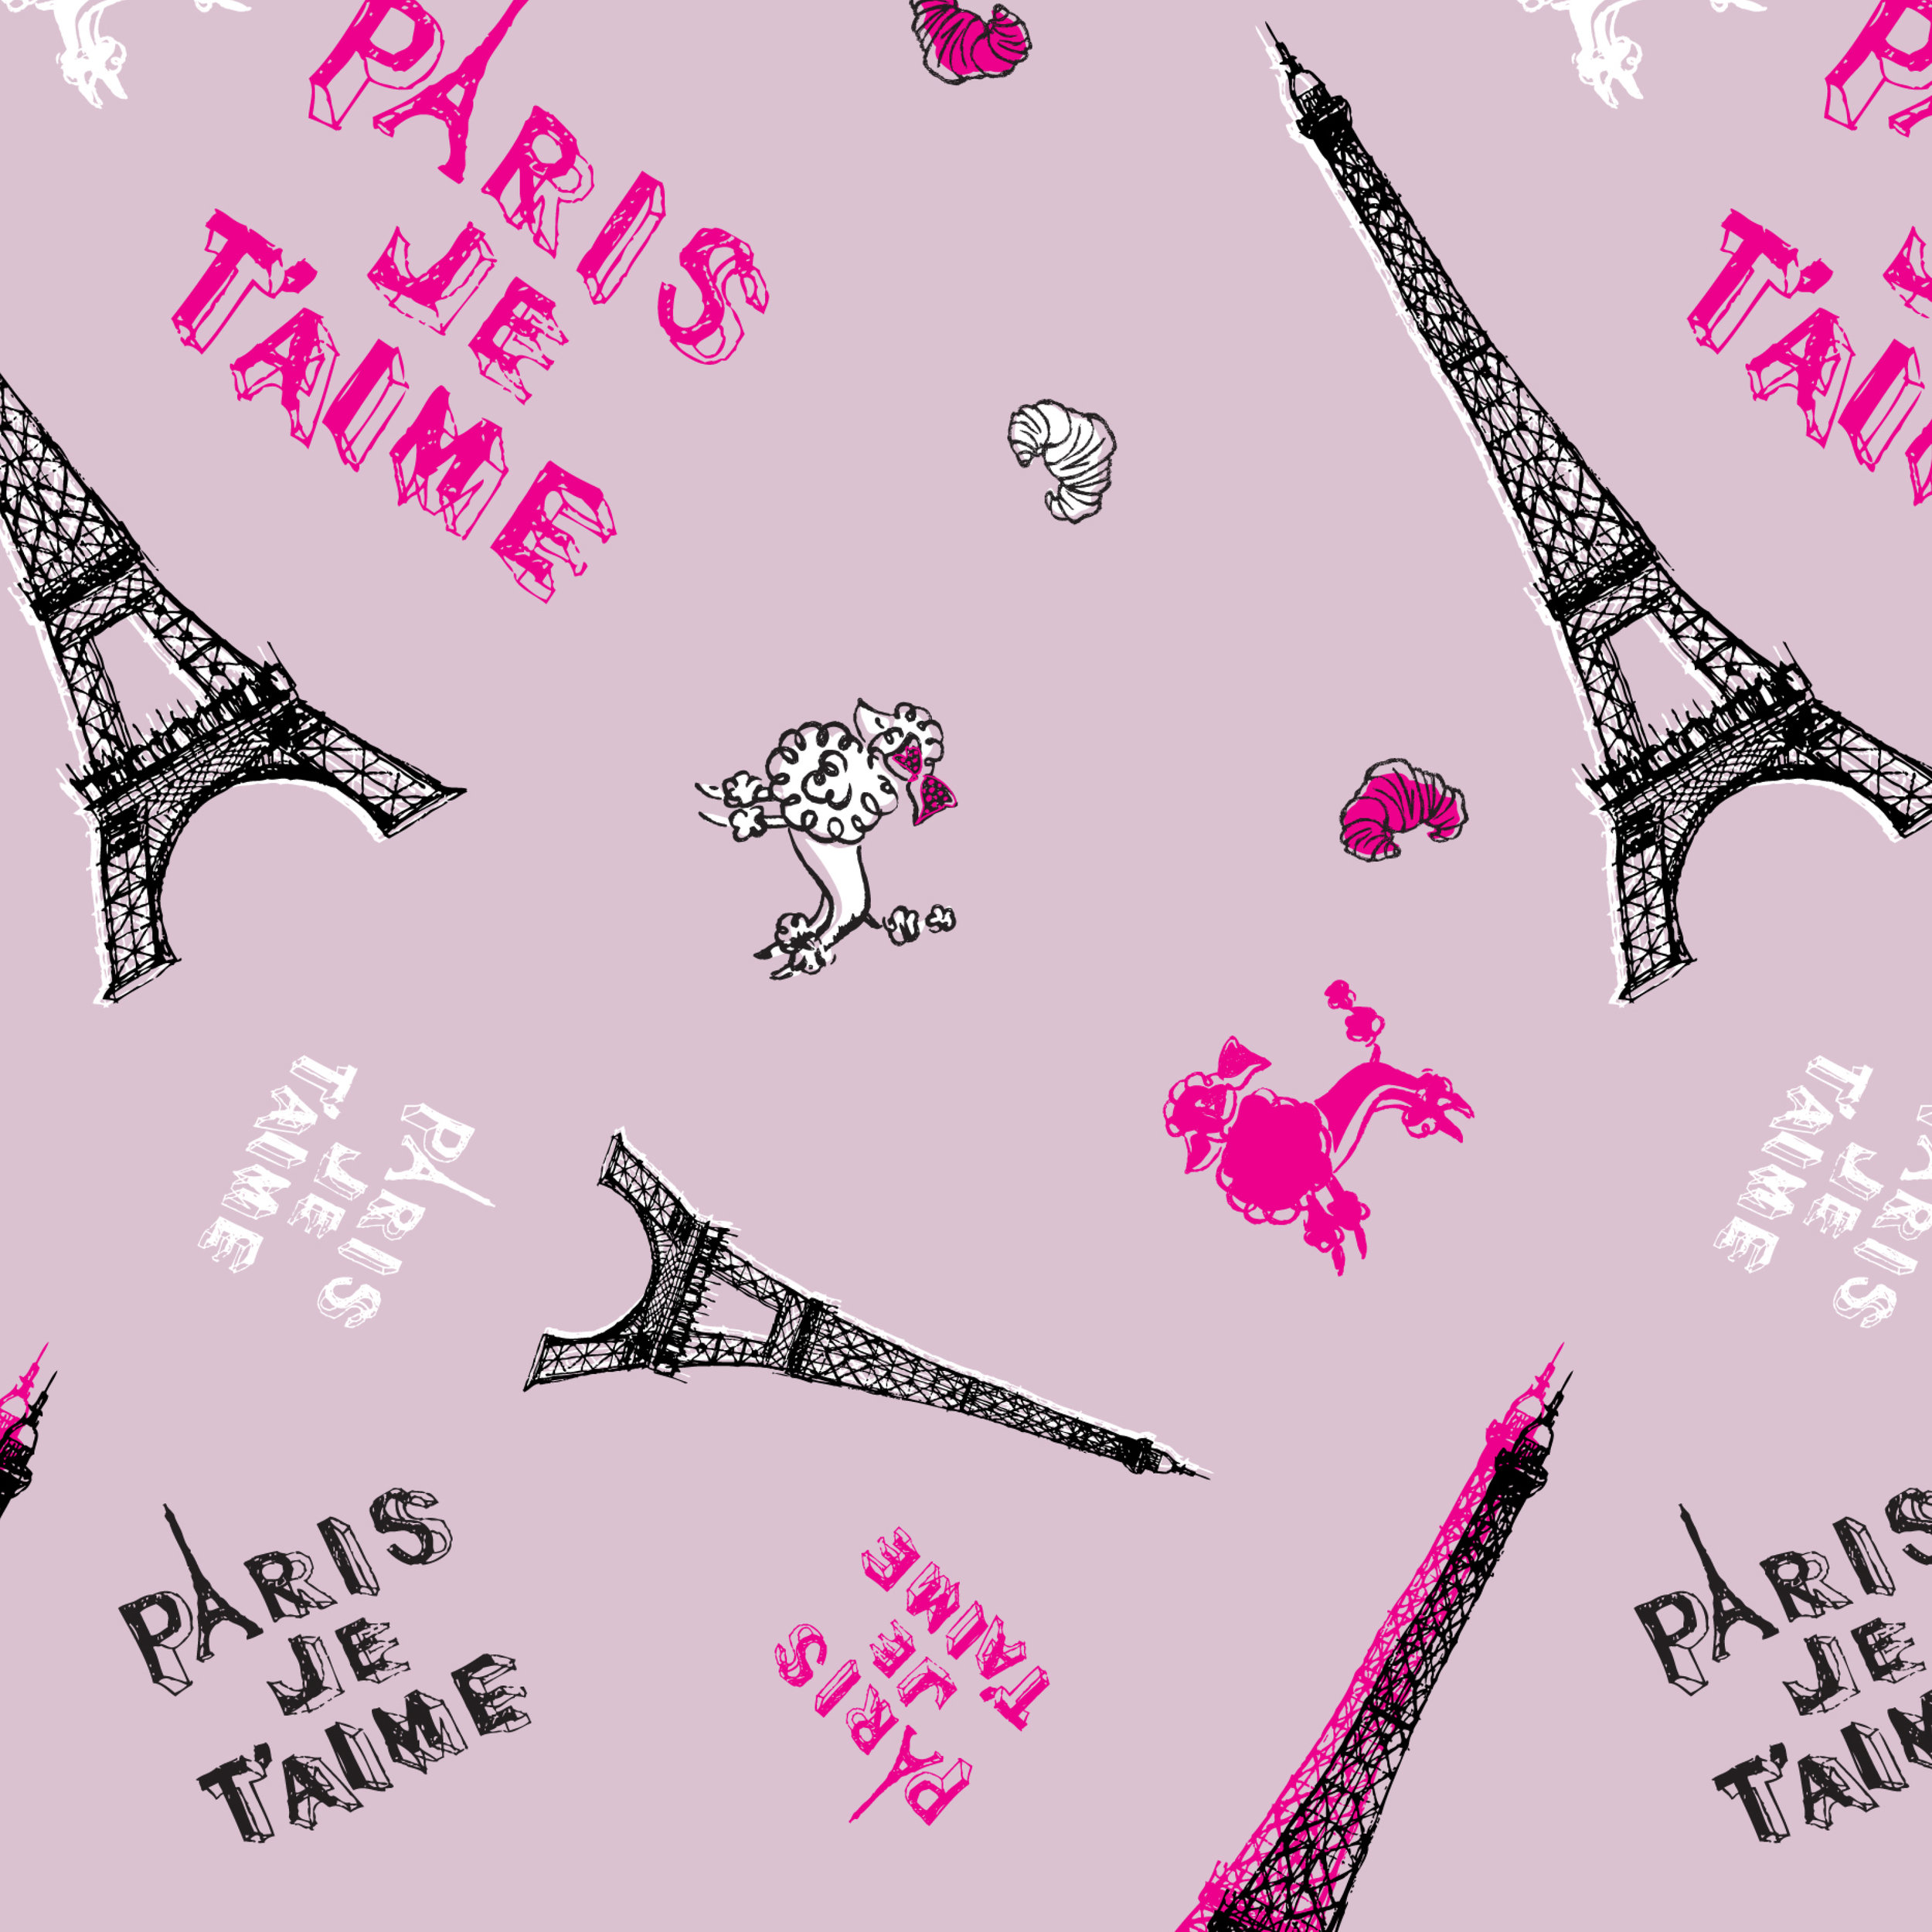 PARIS WITH LOVE.jpg